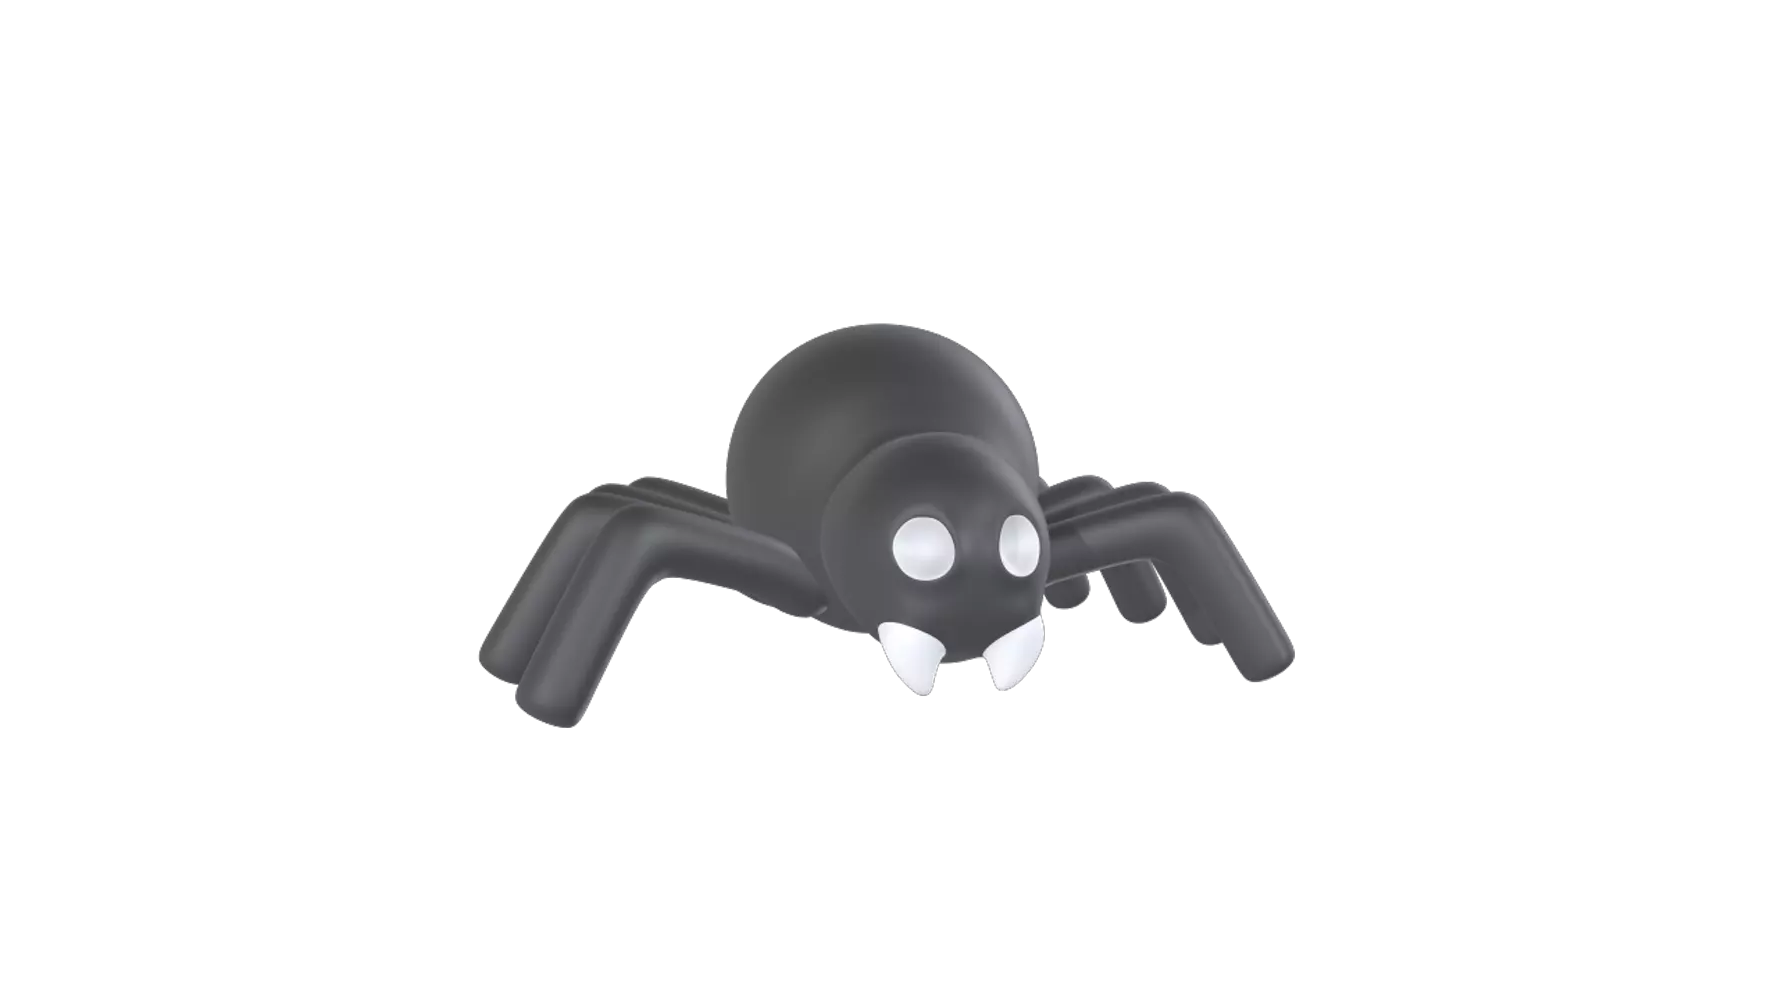 Spider 3D Graphic